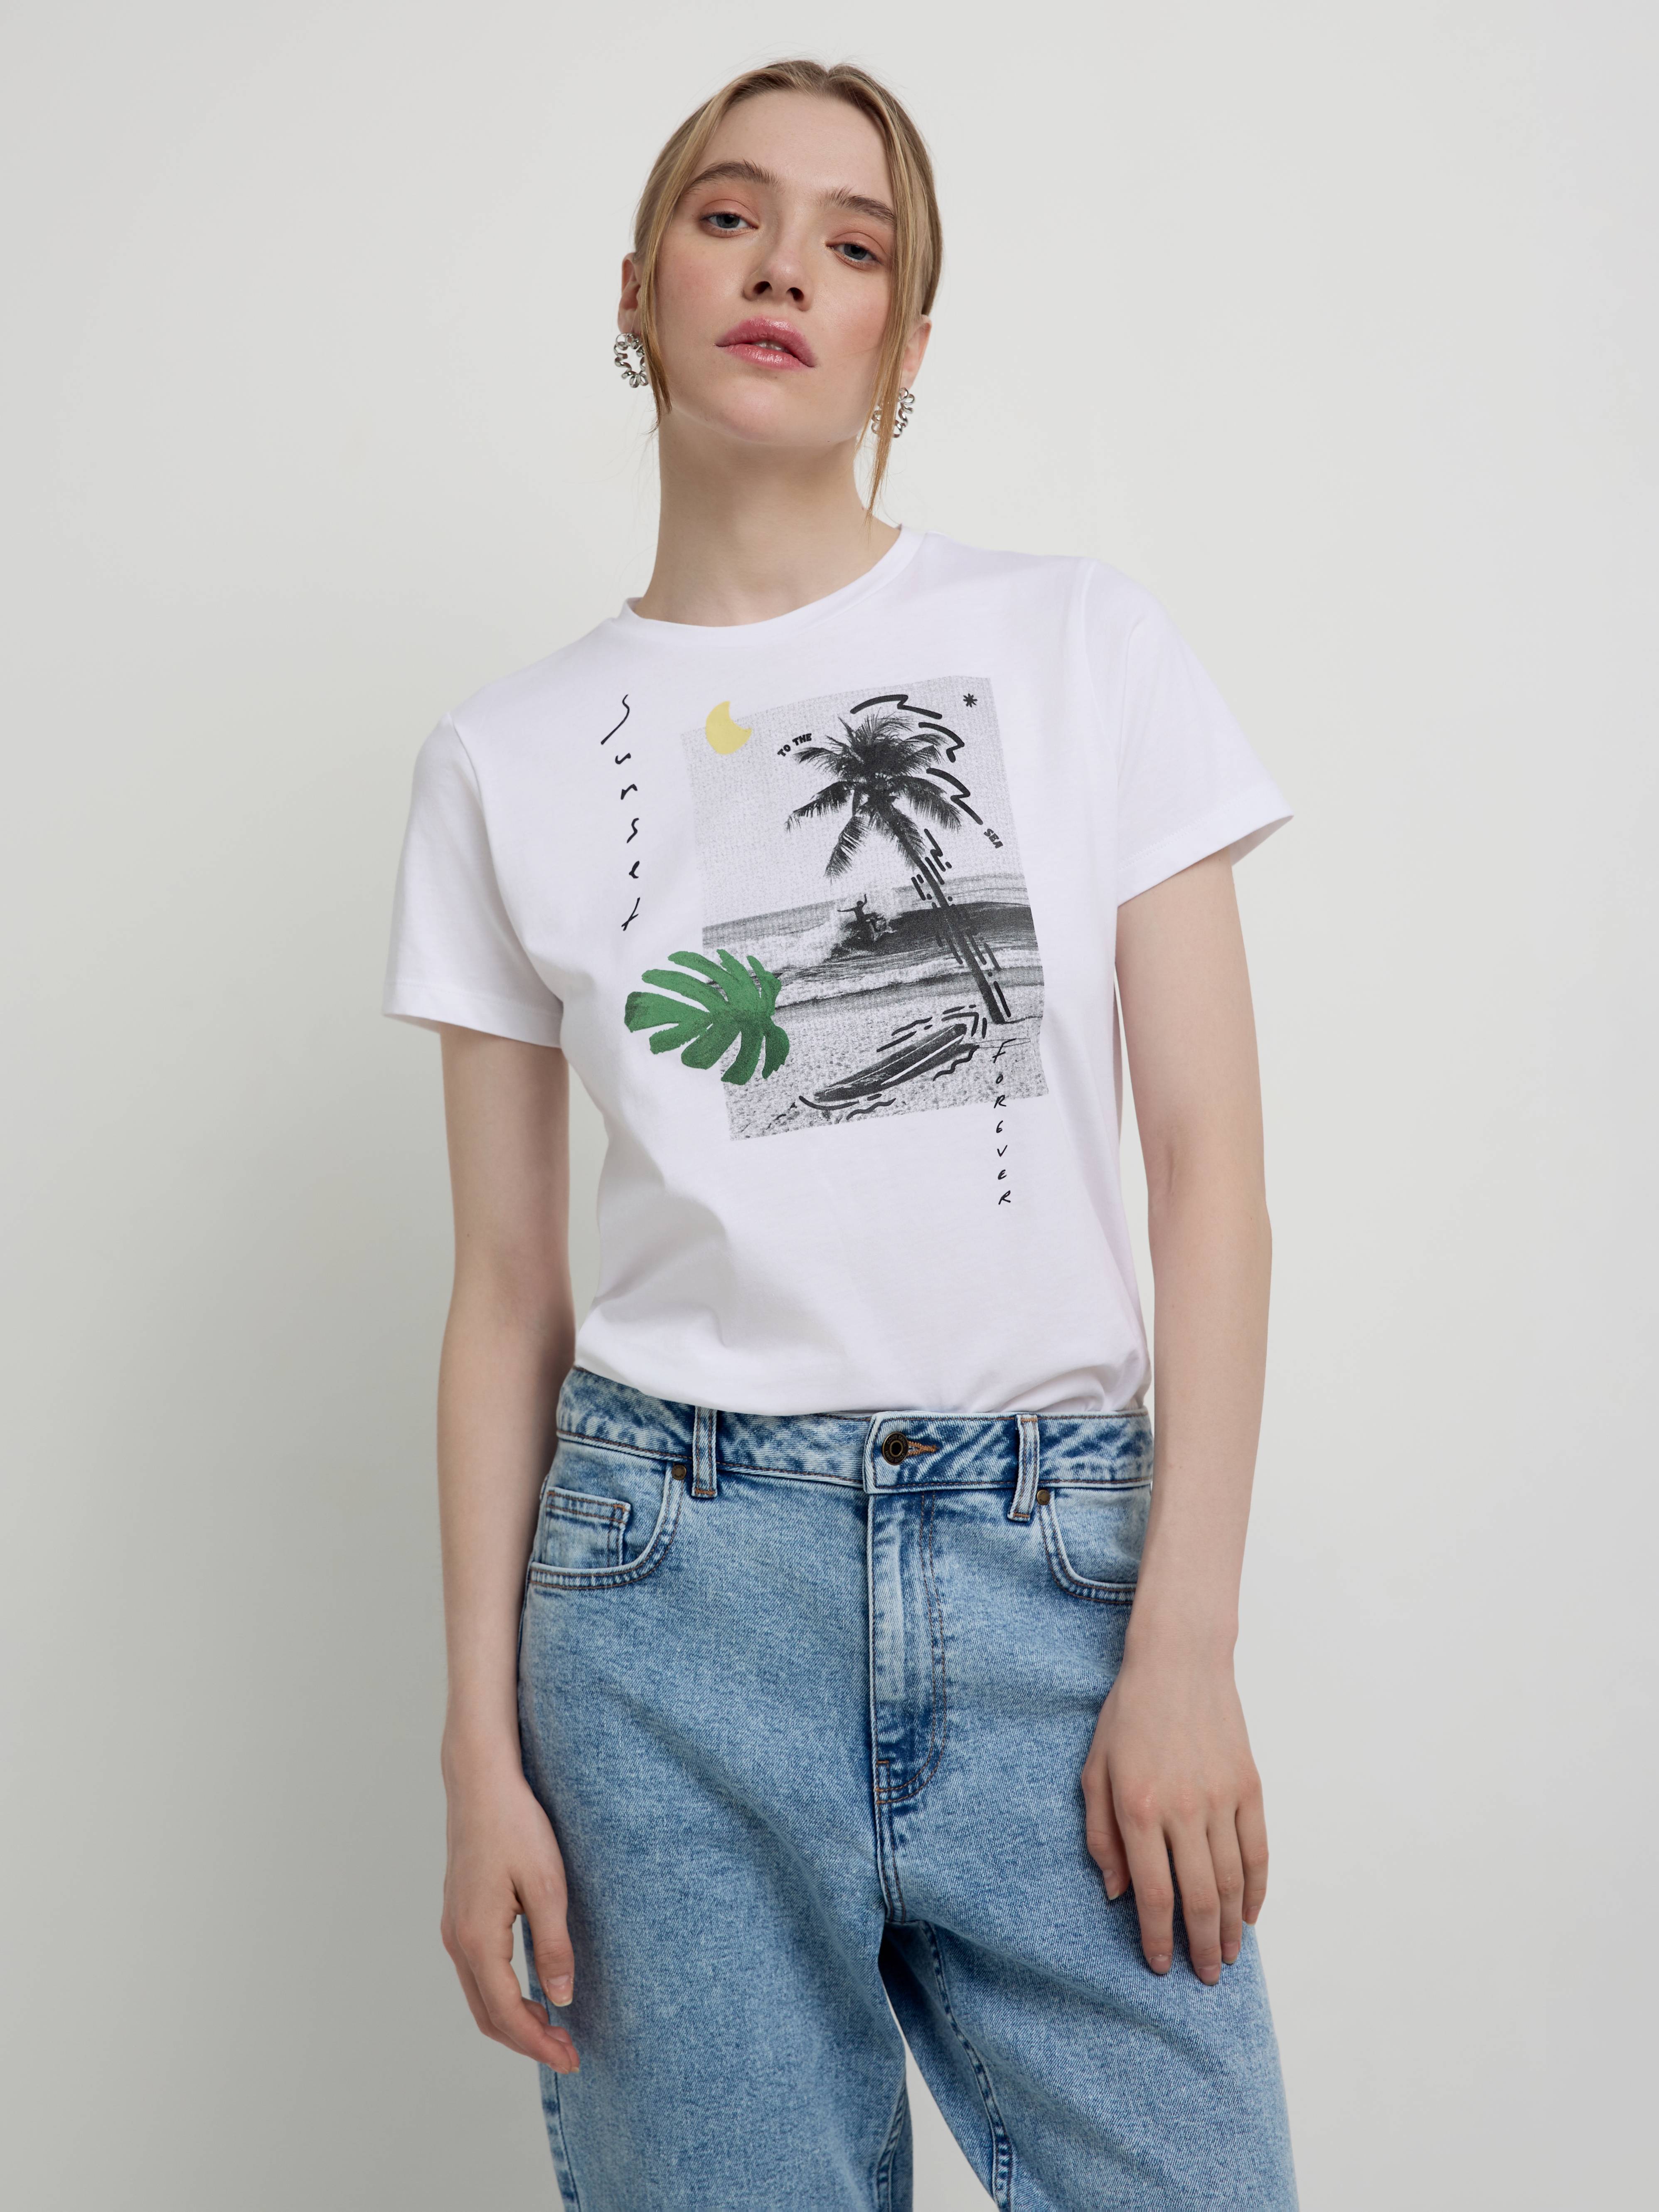 Базовая футболка из хлопка с рисунком «Sunset» LD 2122 Conte ⭐️, цвет white, размер 170-100/l